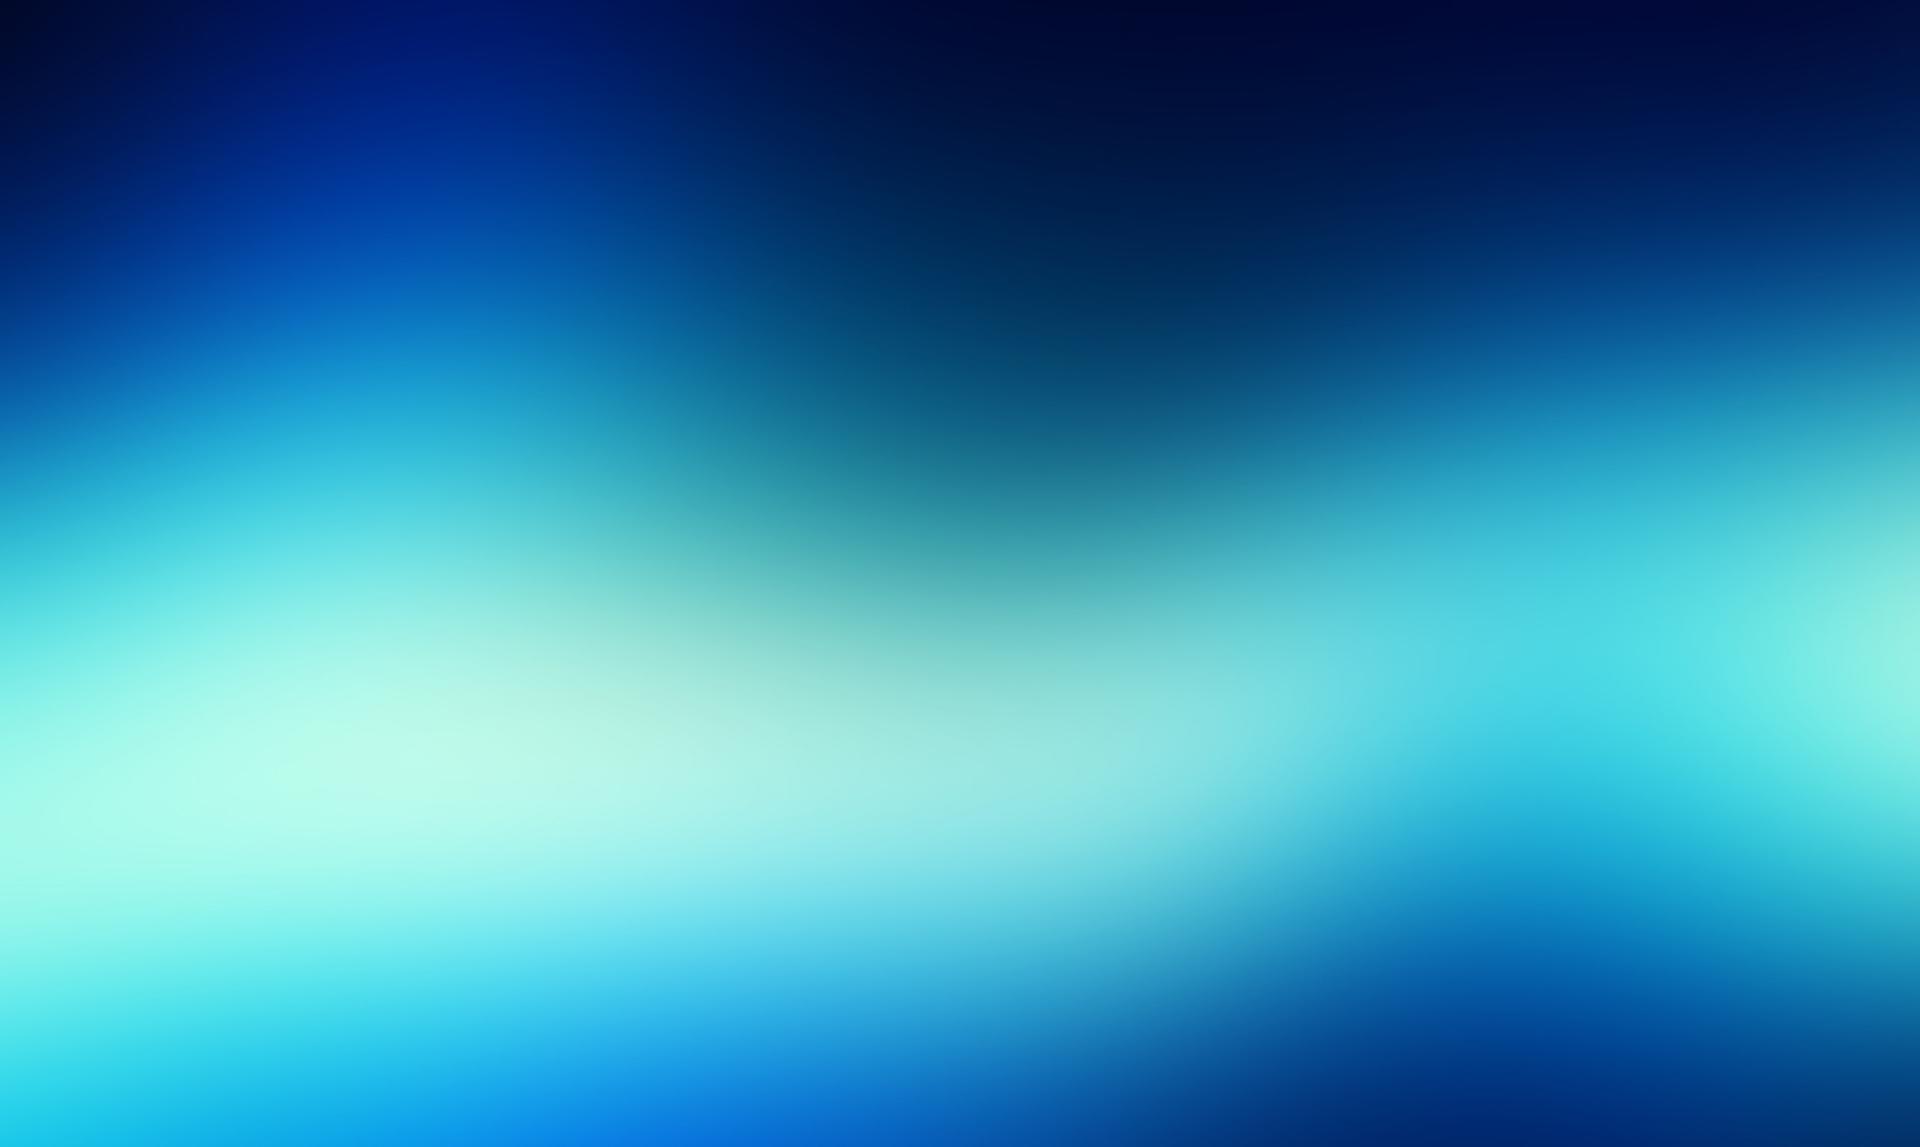 Blue bright blur at 1024 x 1024 iPad size wallpapers HD quality